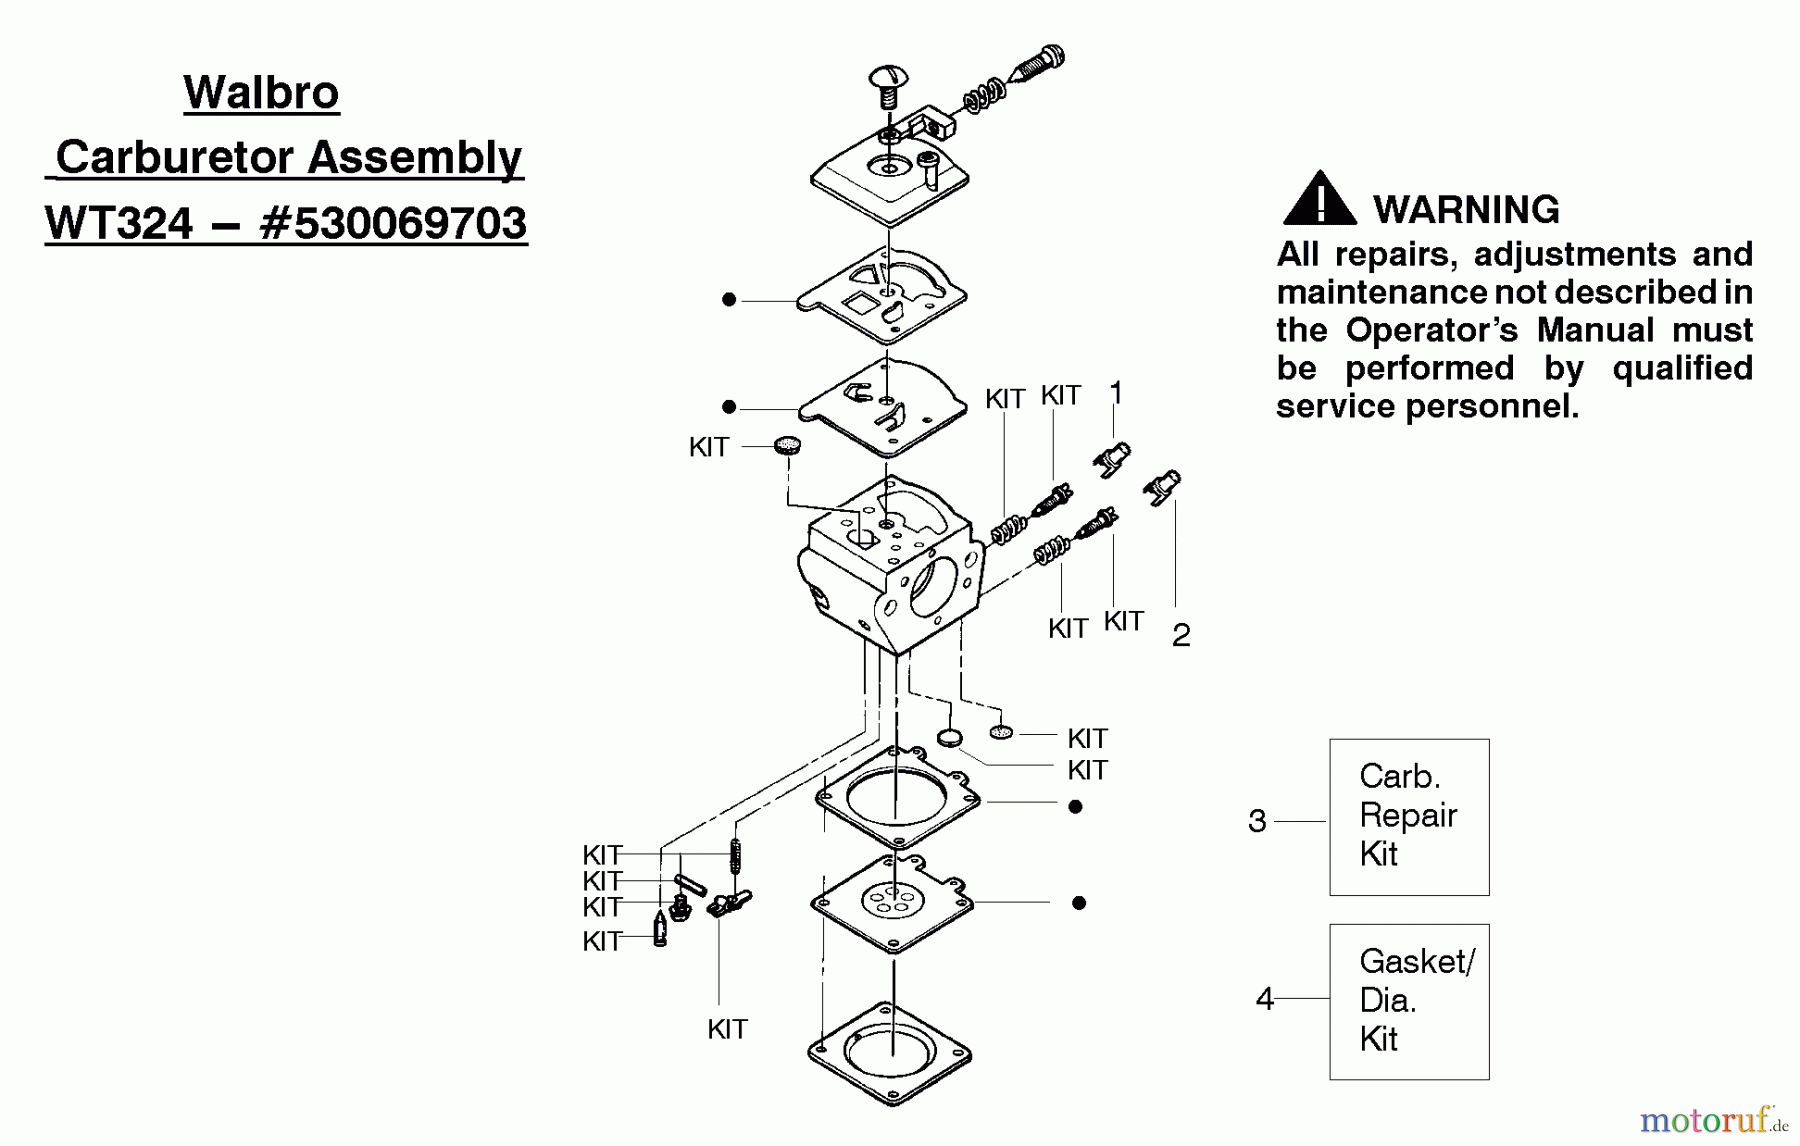  Poulan / Weed Eater Motorsägen 2150 (Type 3) - Poulan Predator Chainsaw Carburetor Assembly (Walbro WT324) 530069703